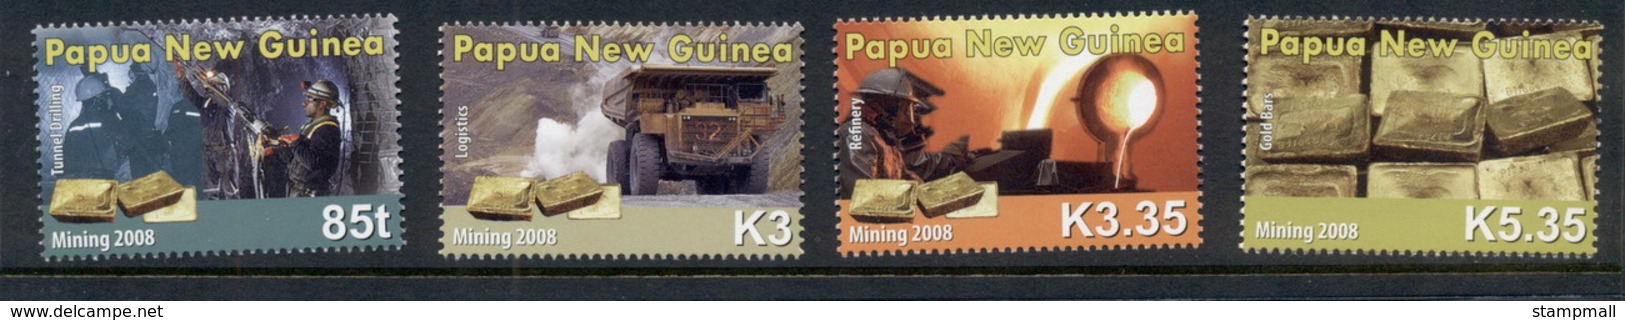 PNG 2008 Mining MUH - Papua New Guinea